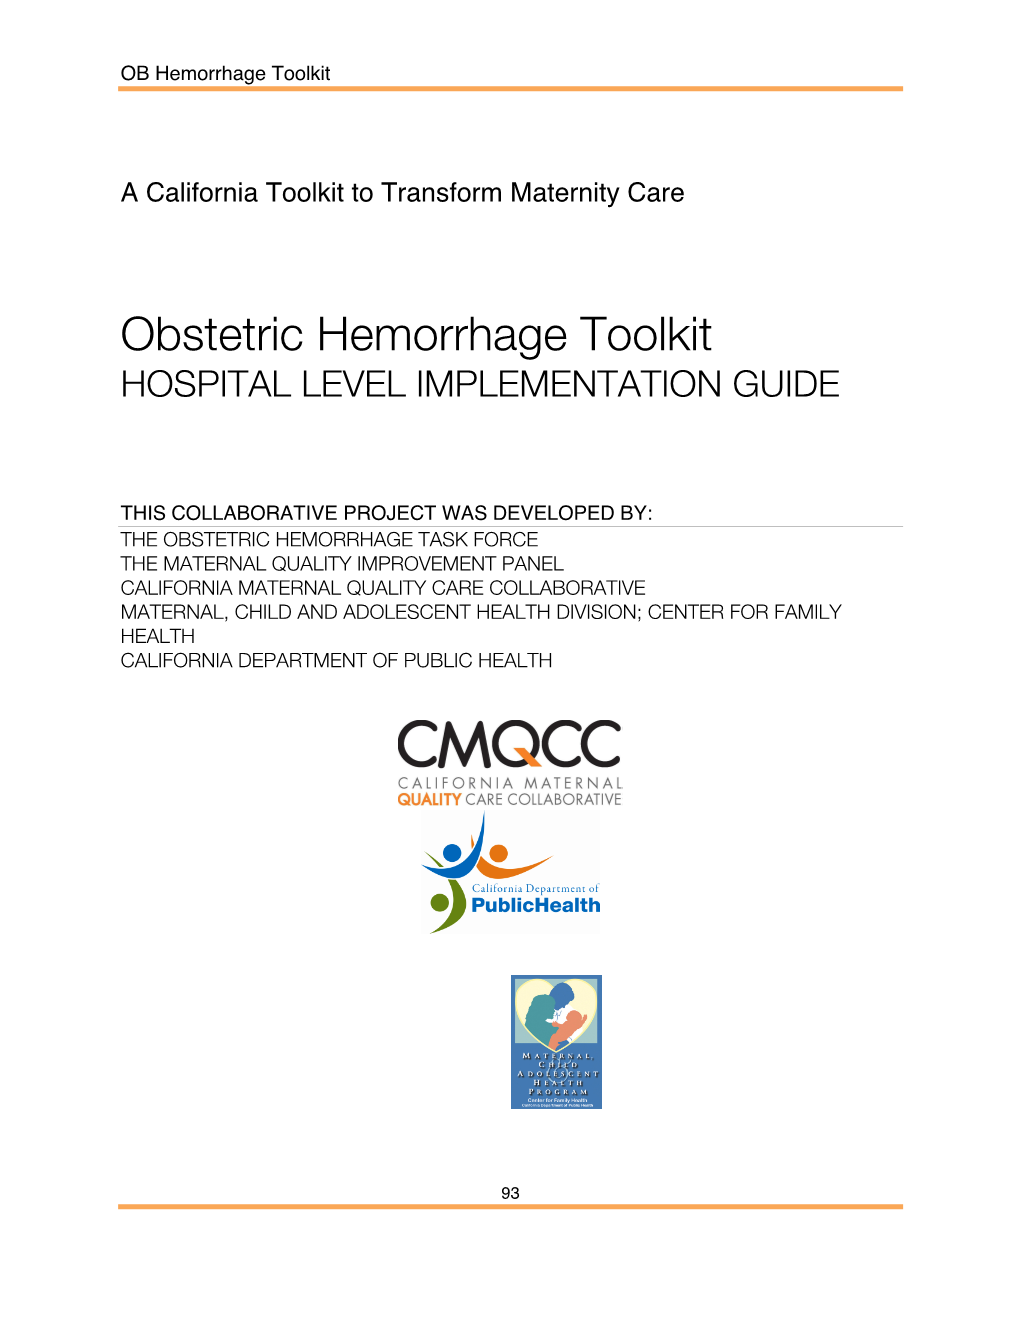 Obstetric Hemorrhage Toolkit HOSPITAL LEVEL IMPLEMENTATION GUIDE